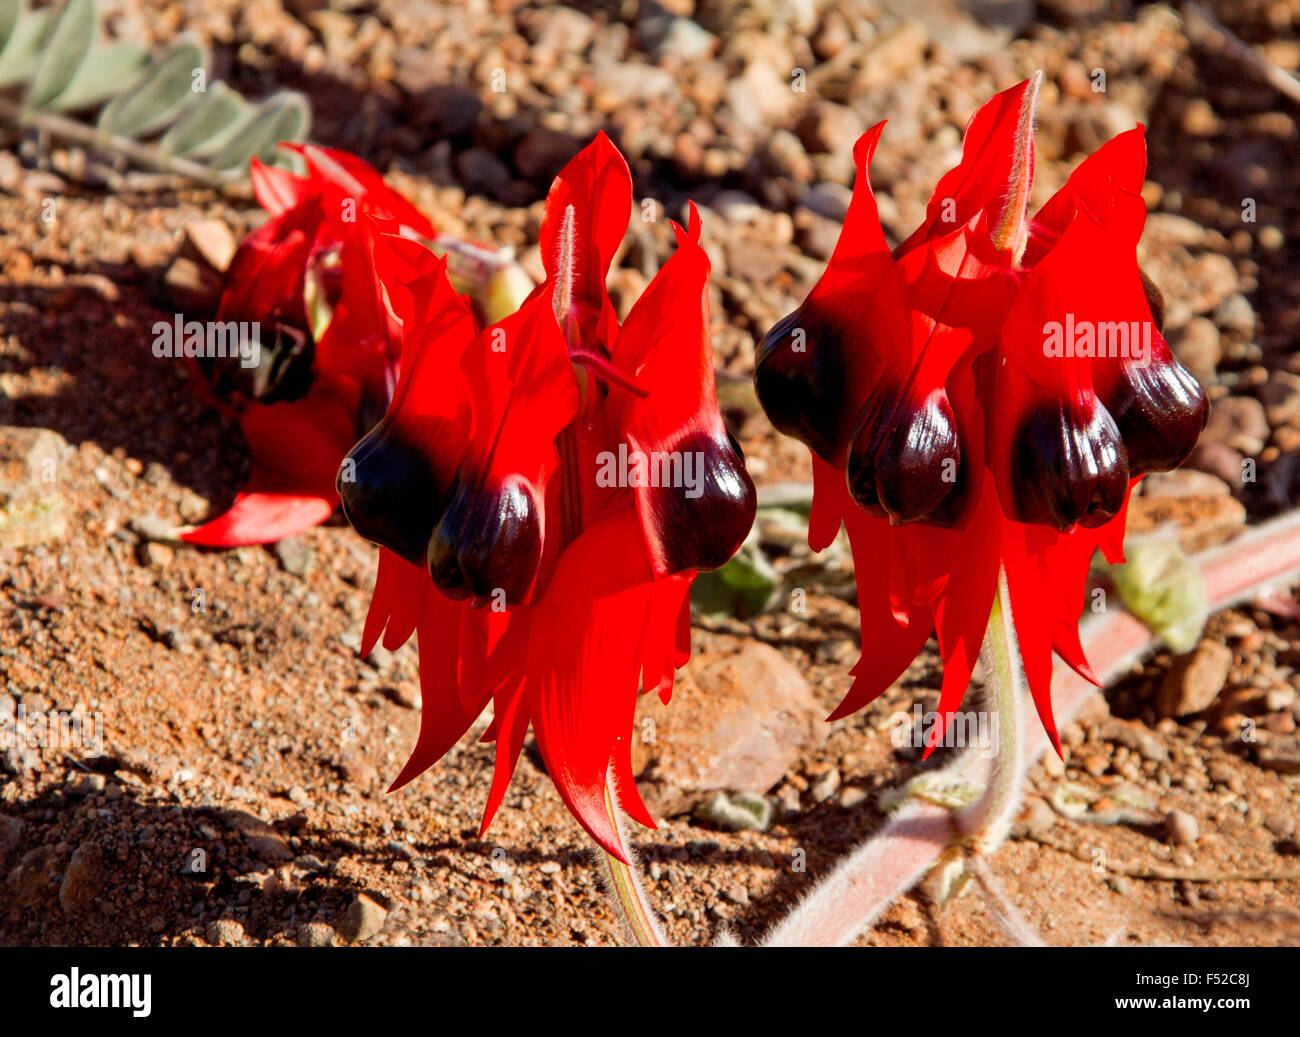 Cluster of vivid red flowers of Sturt's desert pea Swainsona formosa in Flinders Ranges in outback Australia Stock Photo